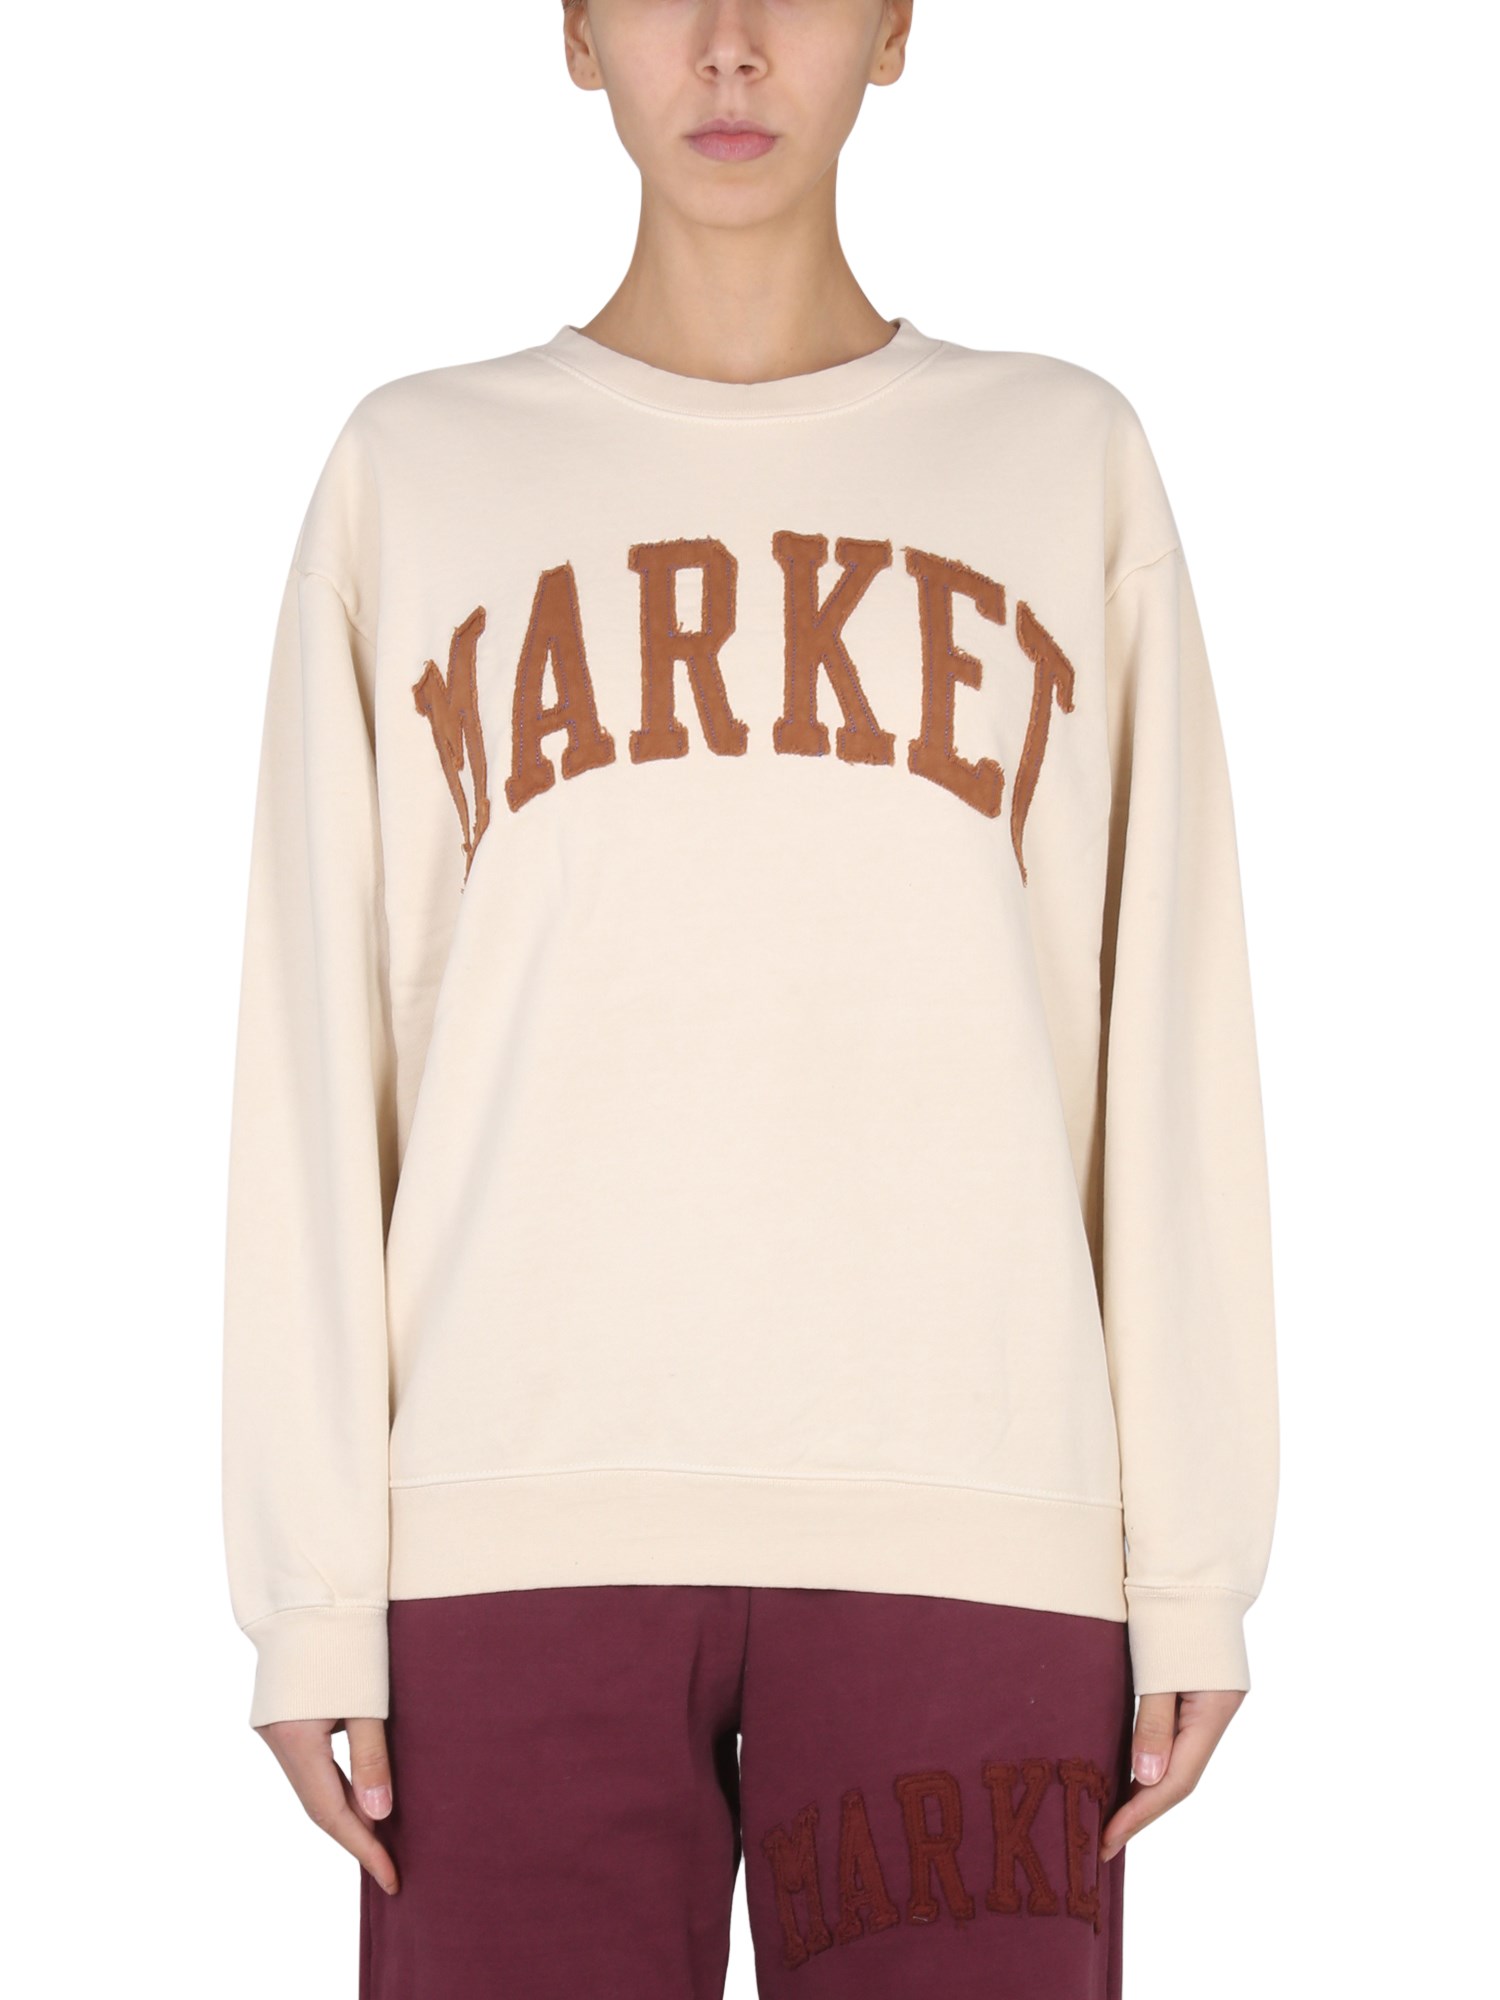 market vintage wash sweatshirt